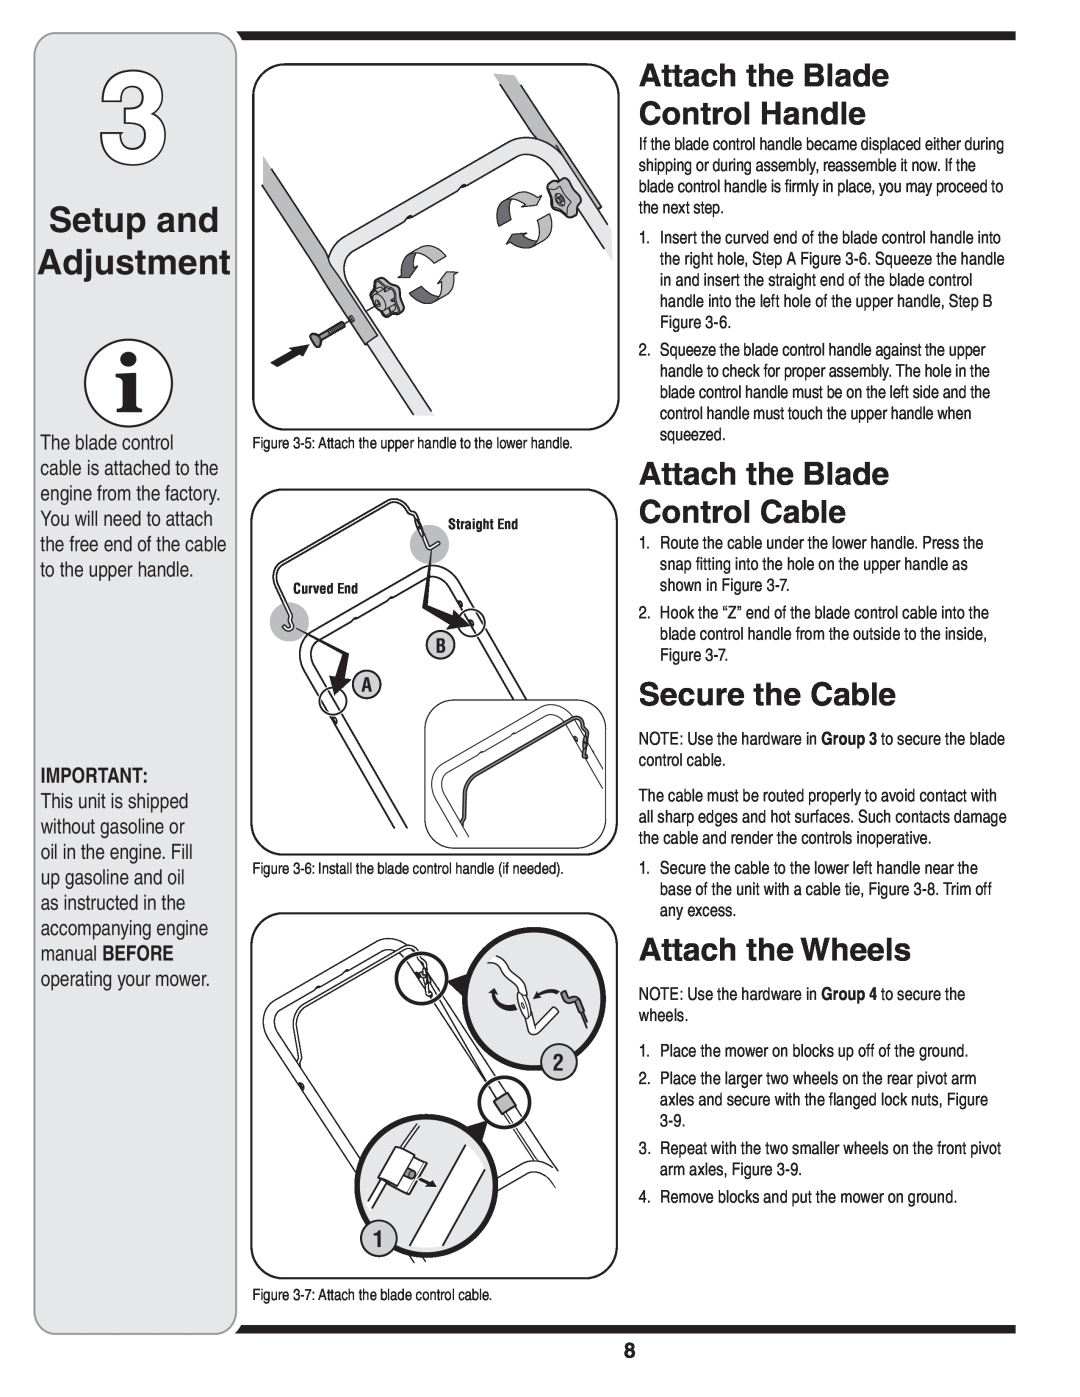 MTD 38 warranty Attach the Blade Control Handle, Attach the Blade Control Cable, Secure the Cable, Attach the Wheels 